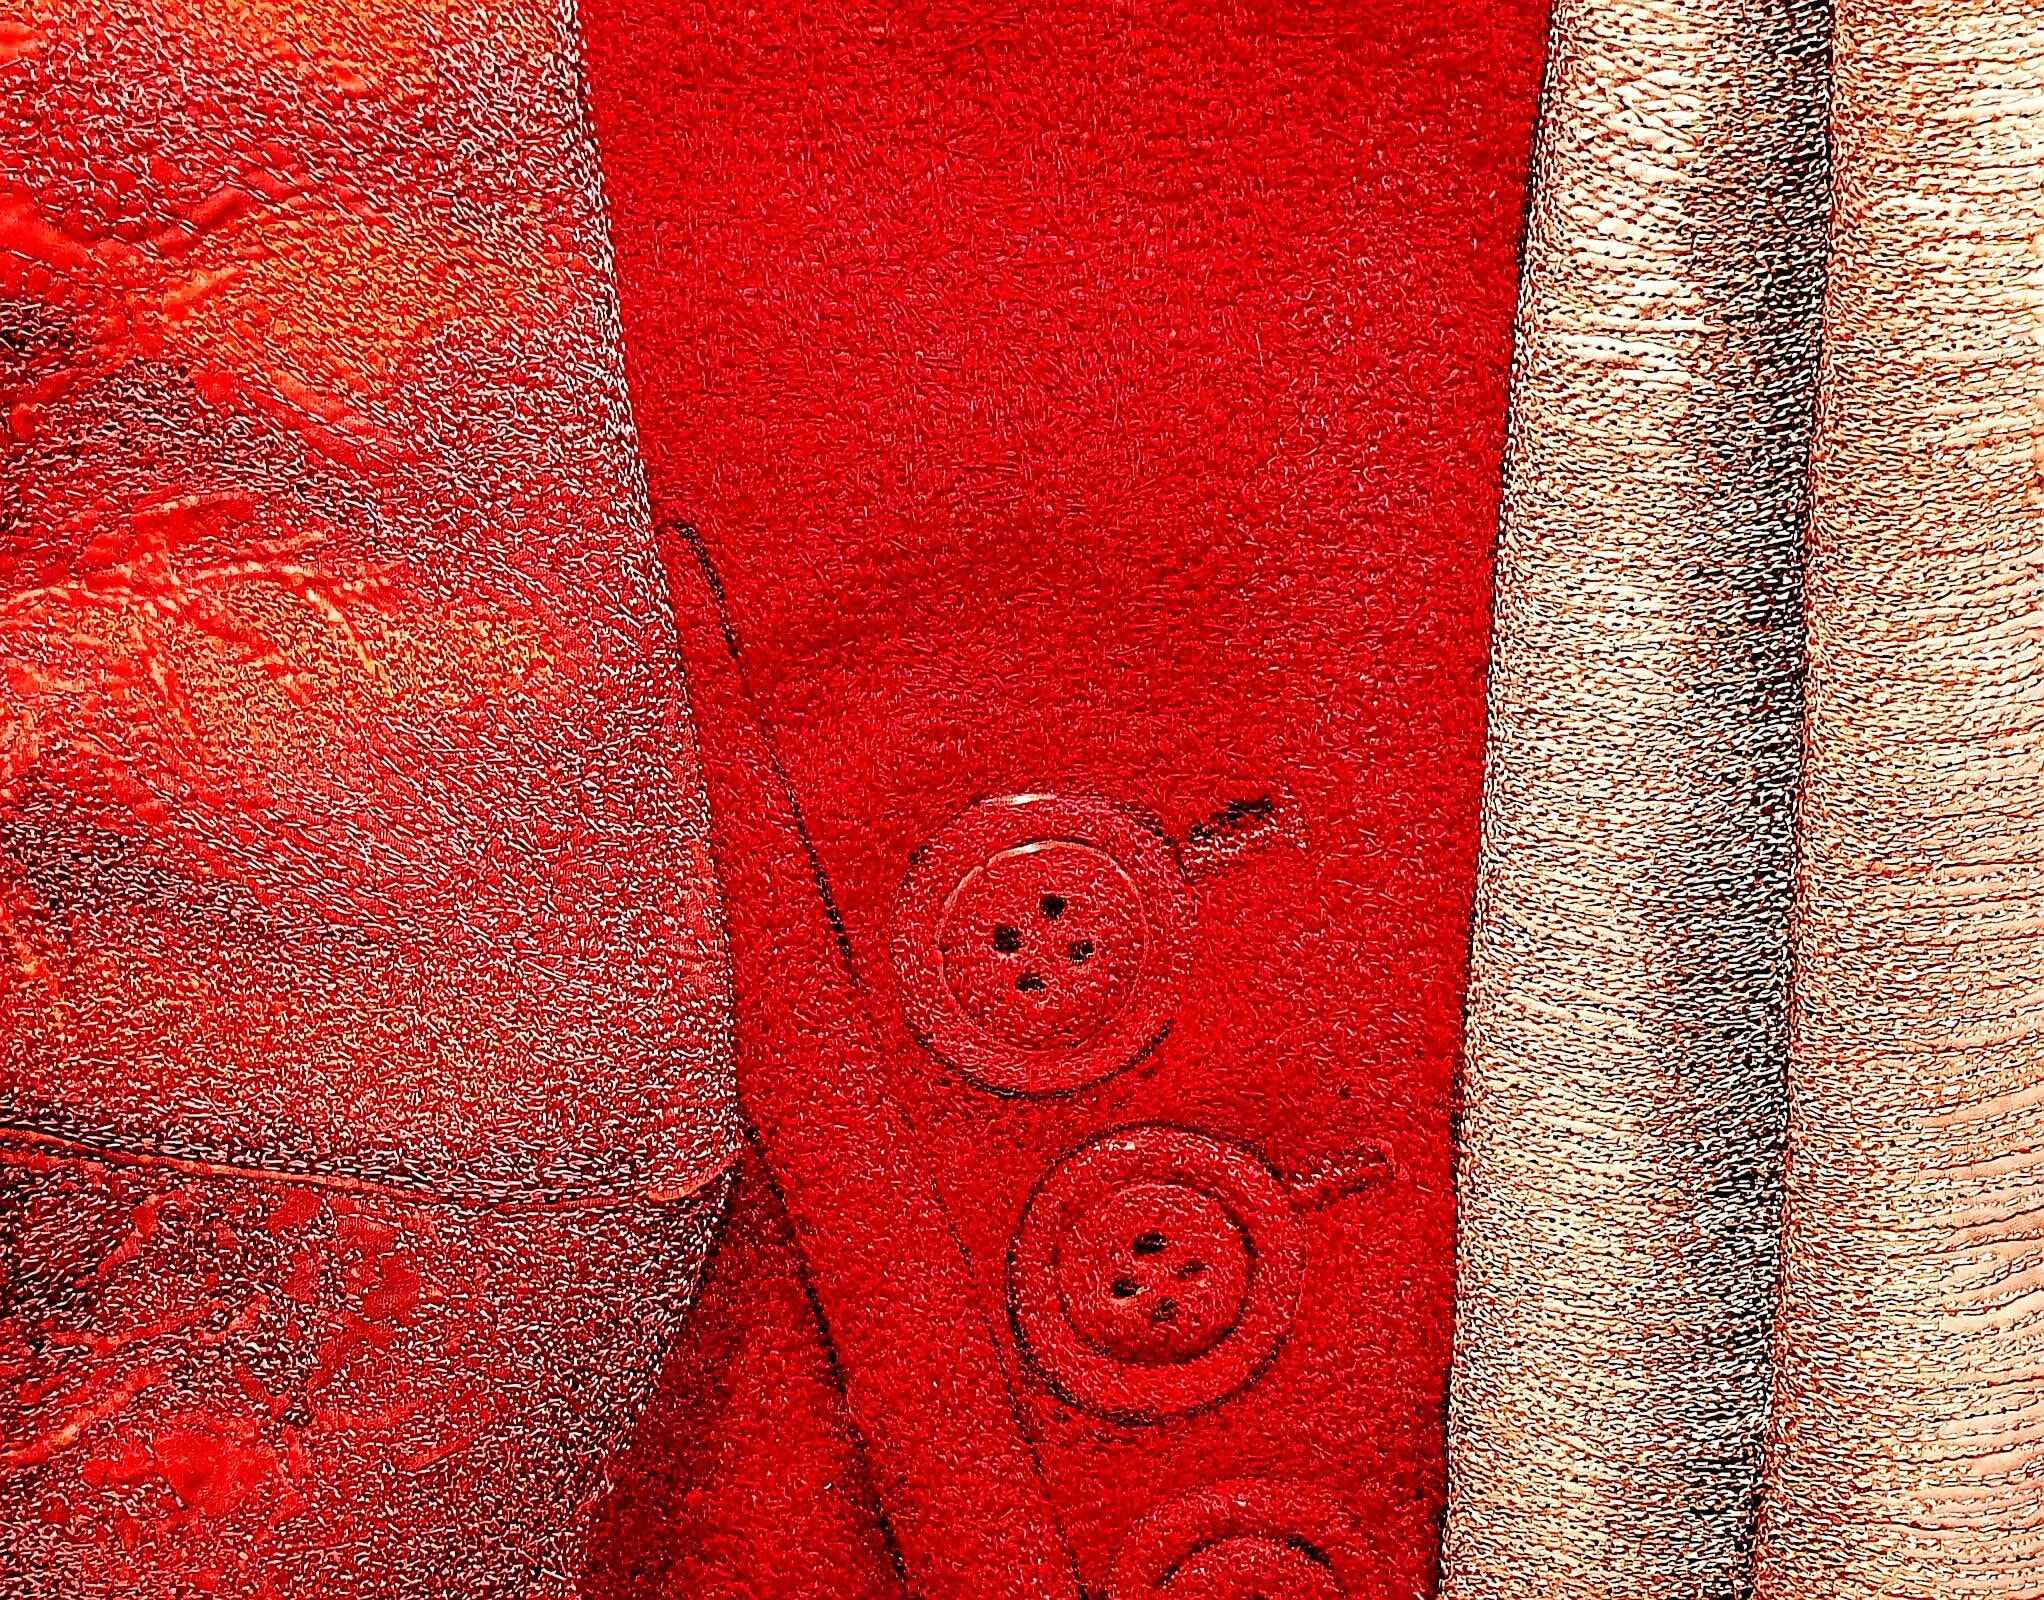 Joann Fife-My Wardrobe-digital image on cotton, free motion stitching-23x19cm-framed